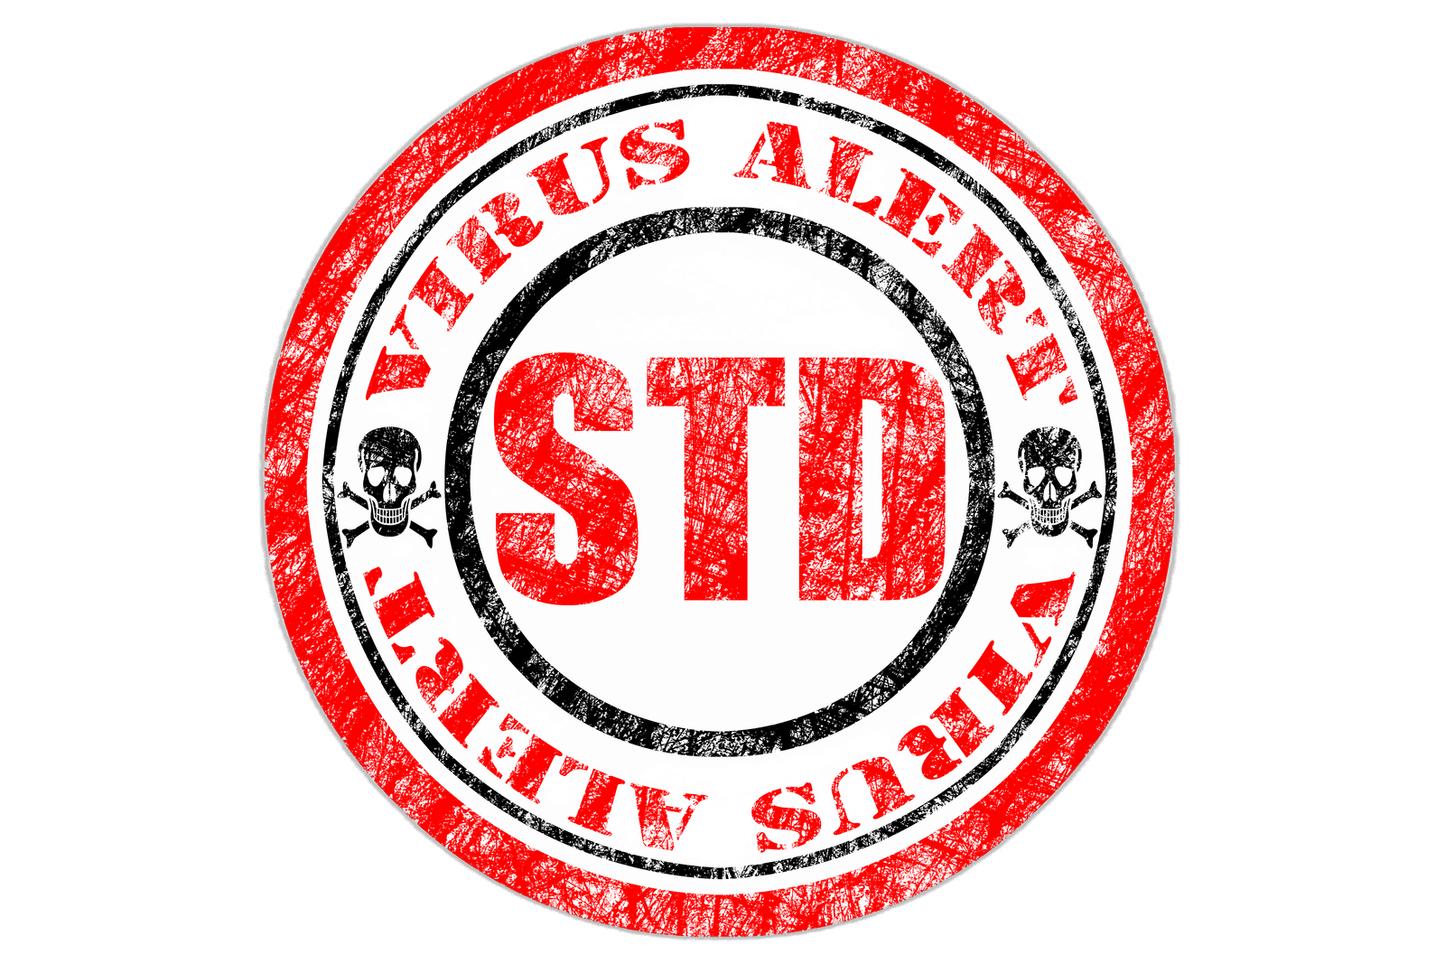 STD Profile - healthcare nt sickcare